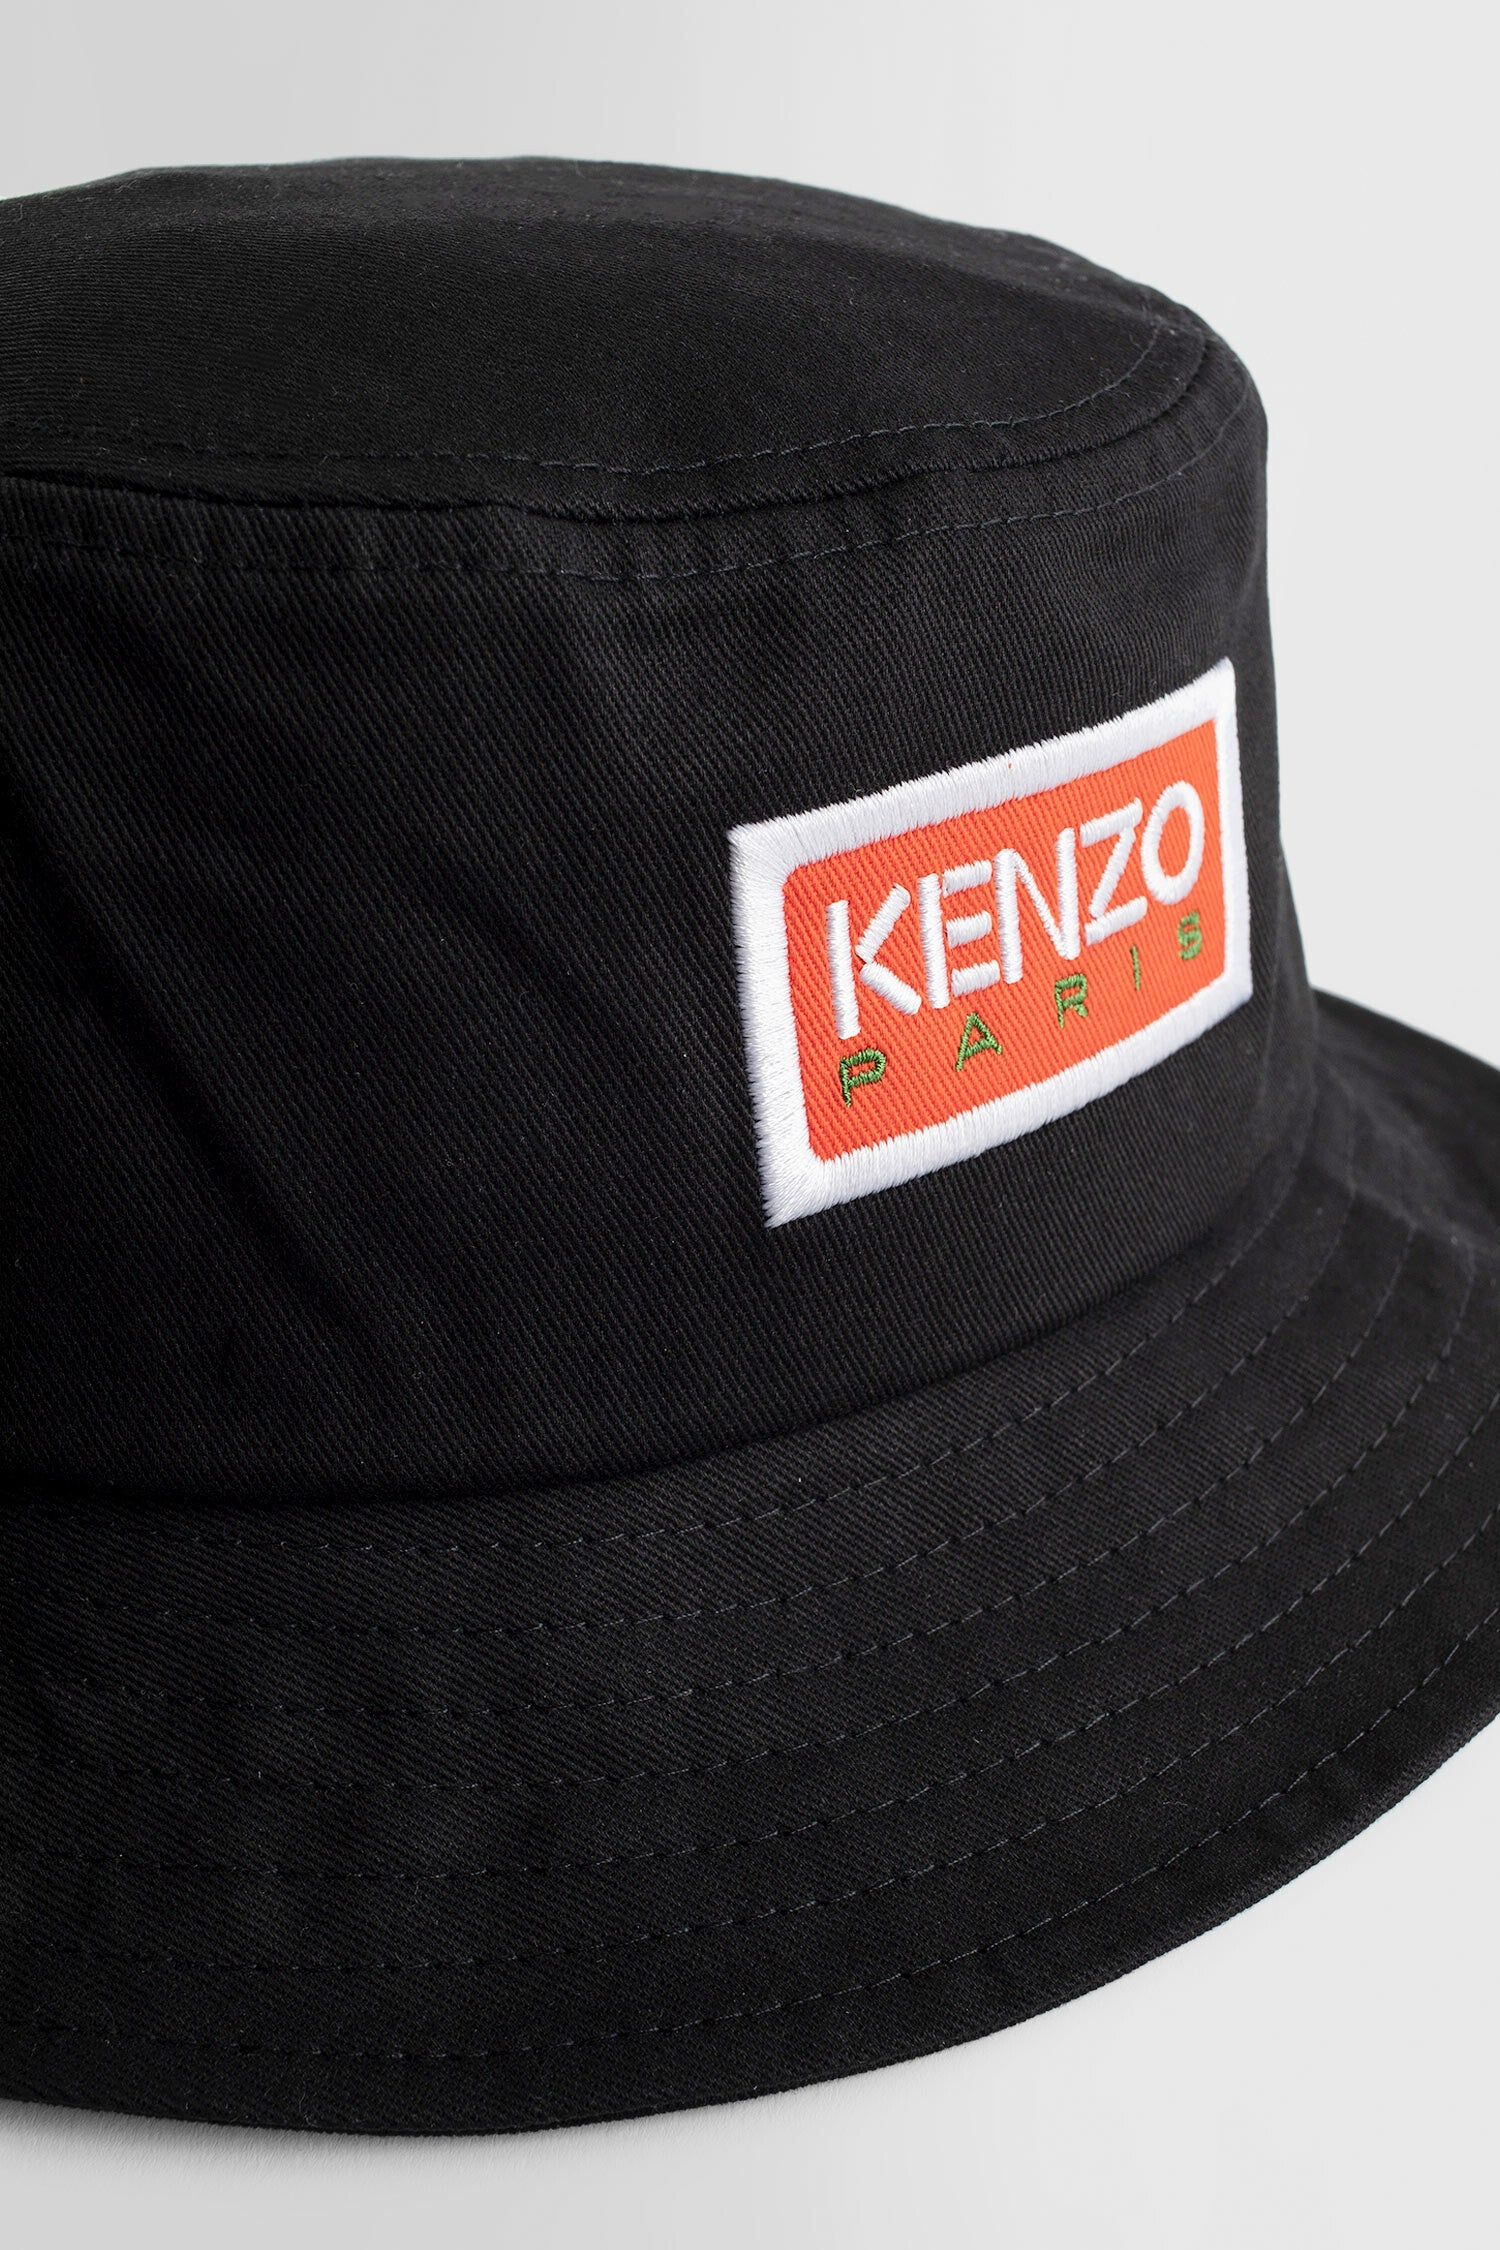 KENZO x Nigo Jungle Bucket Hat Black